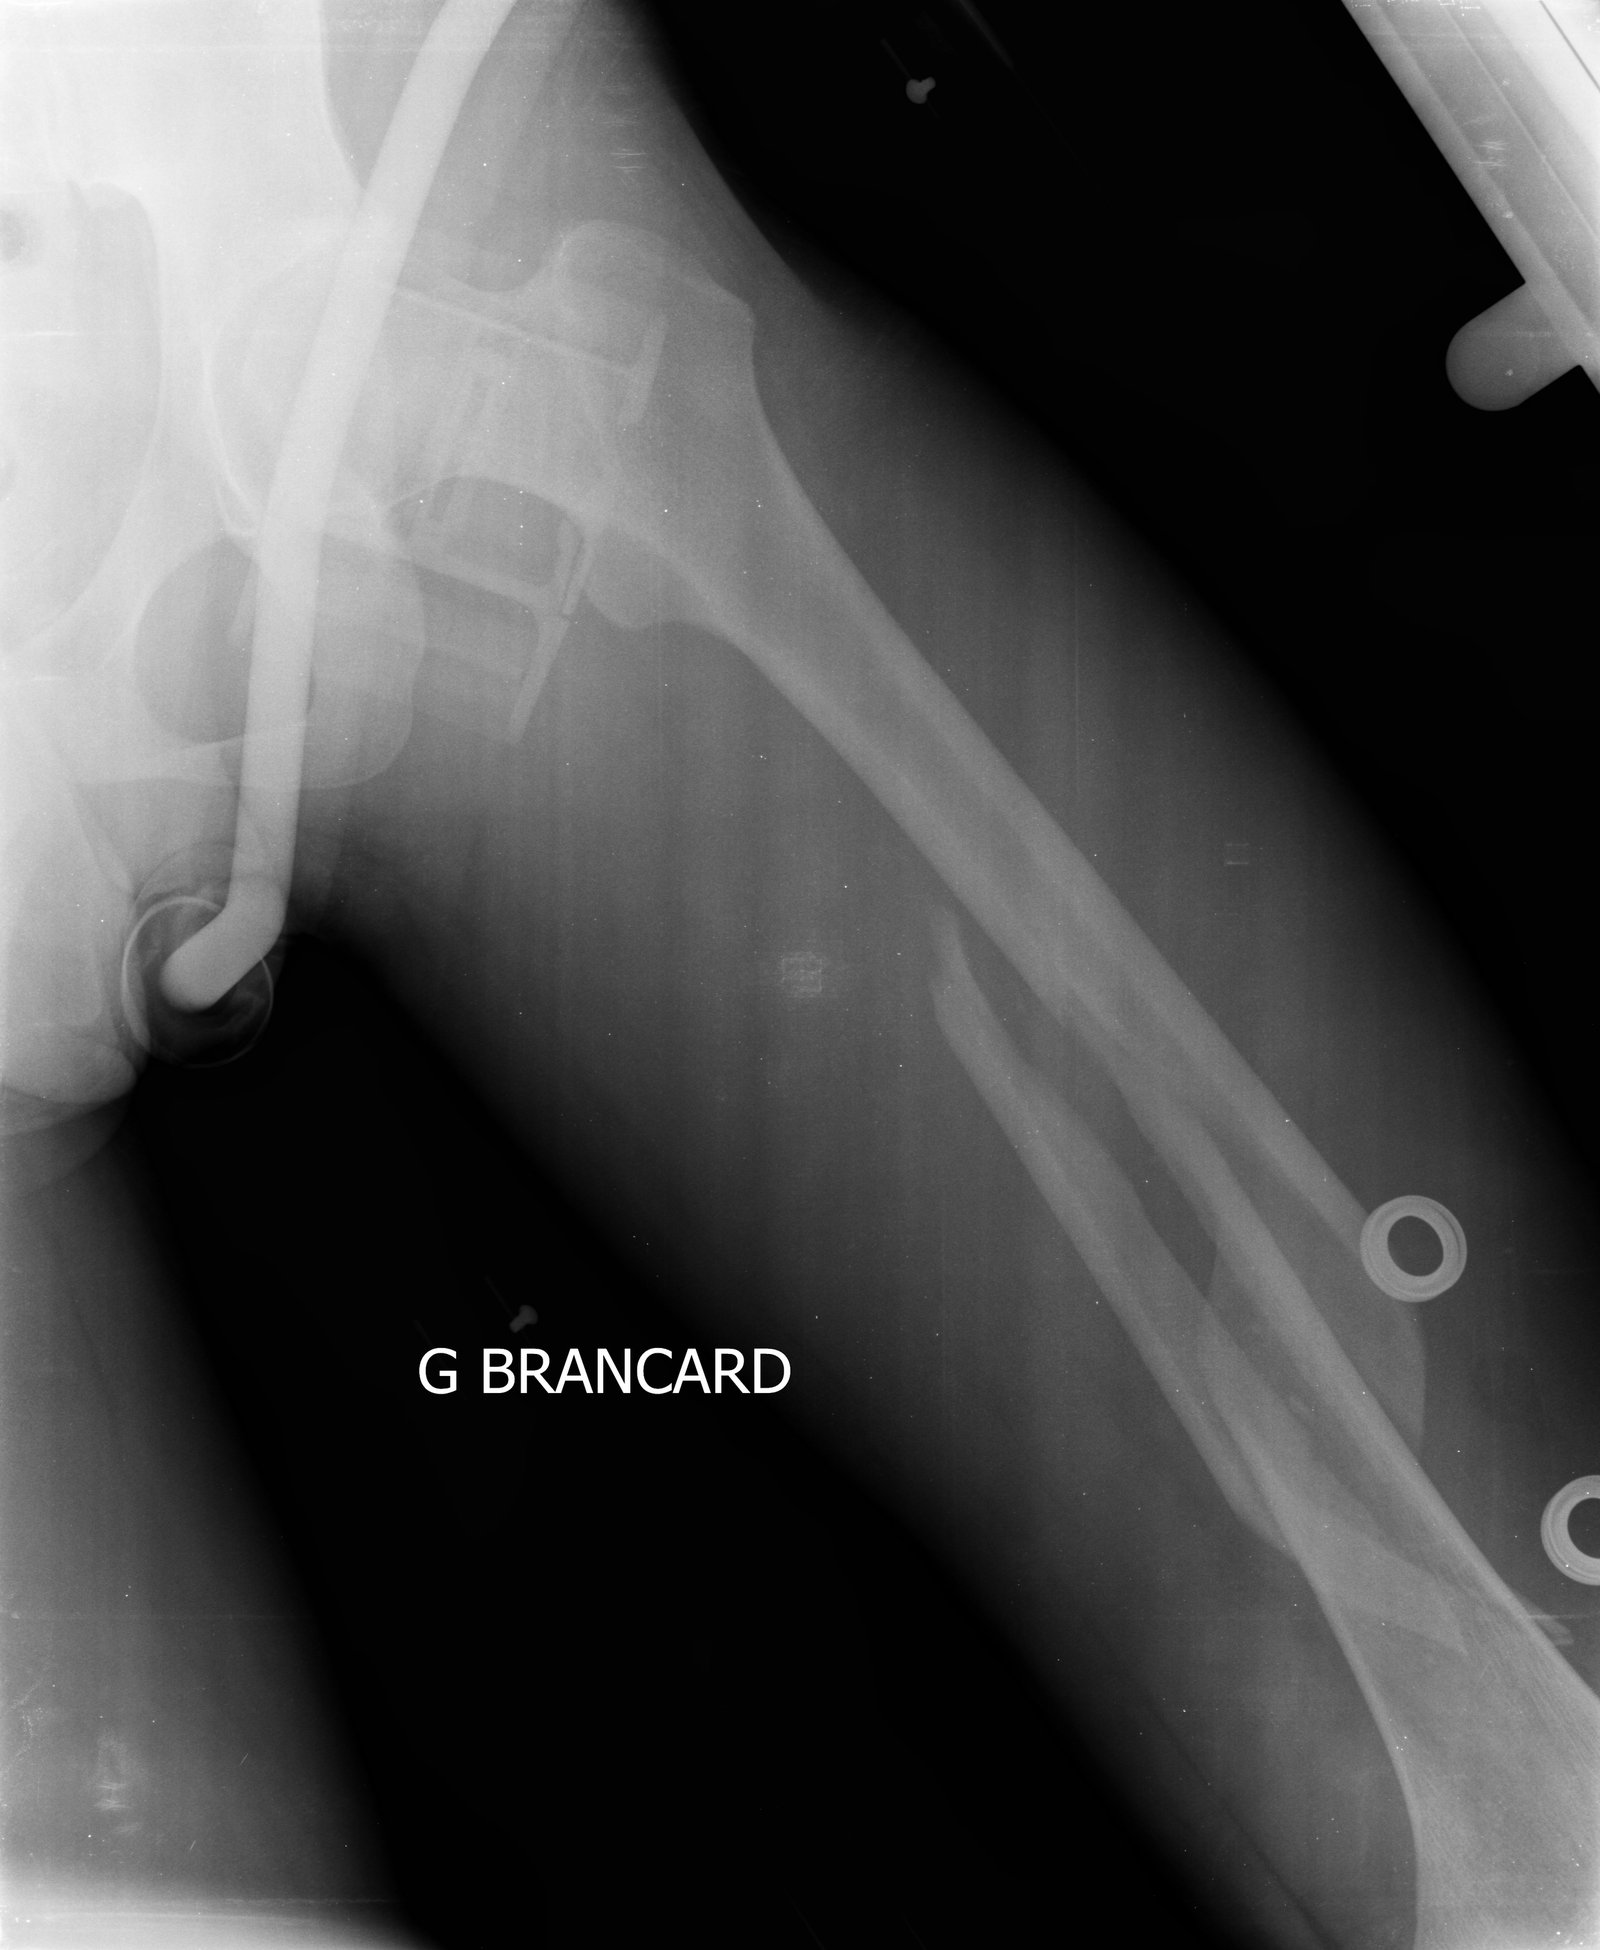 Broken left femur